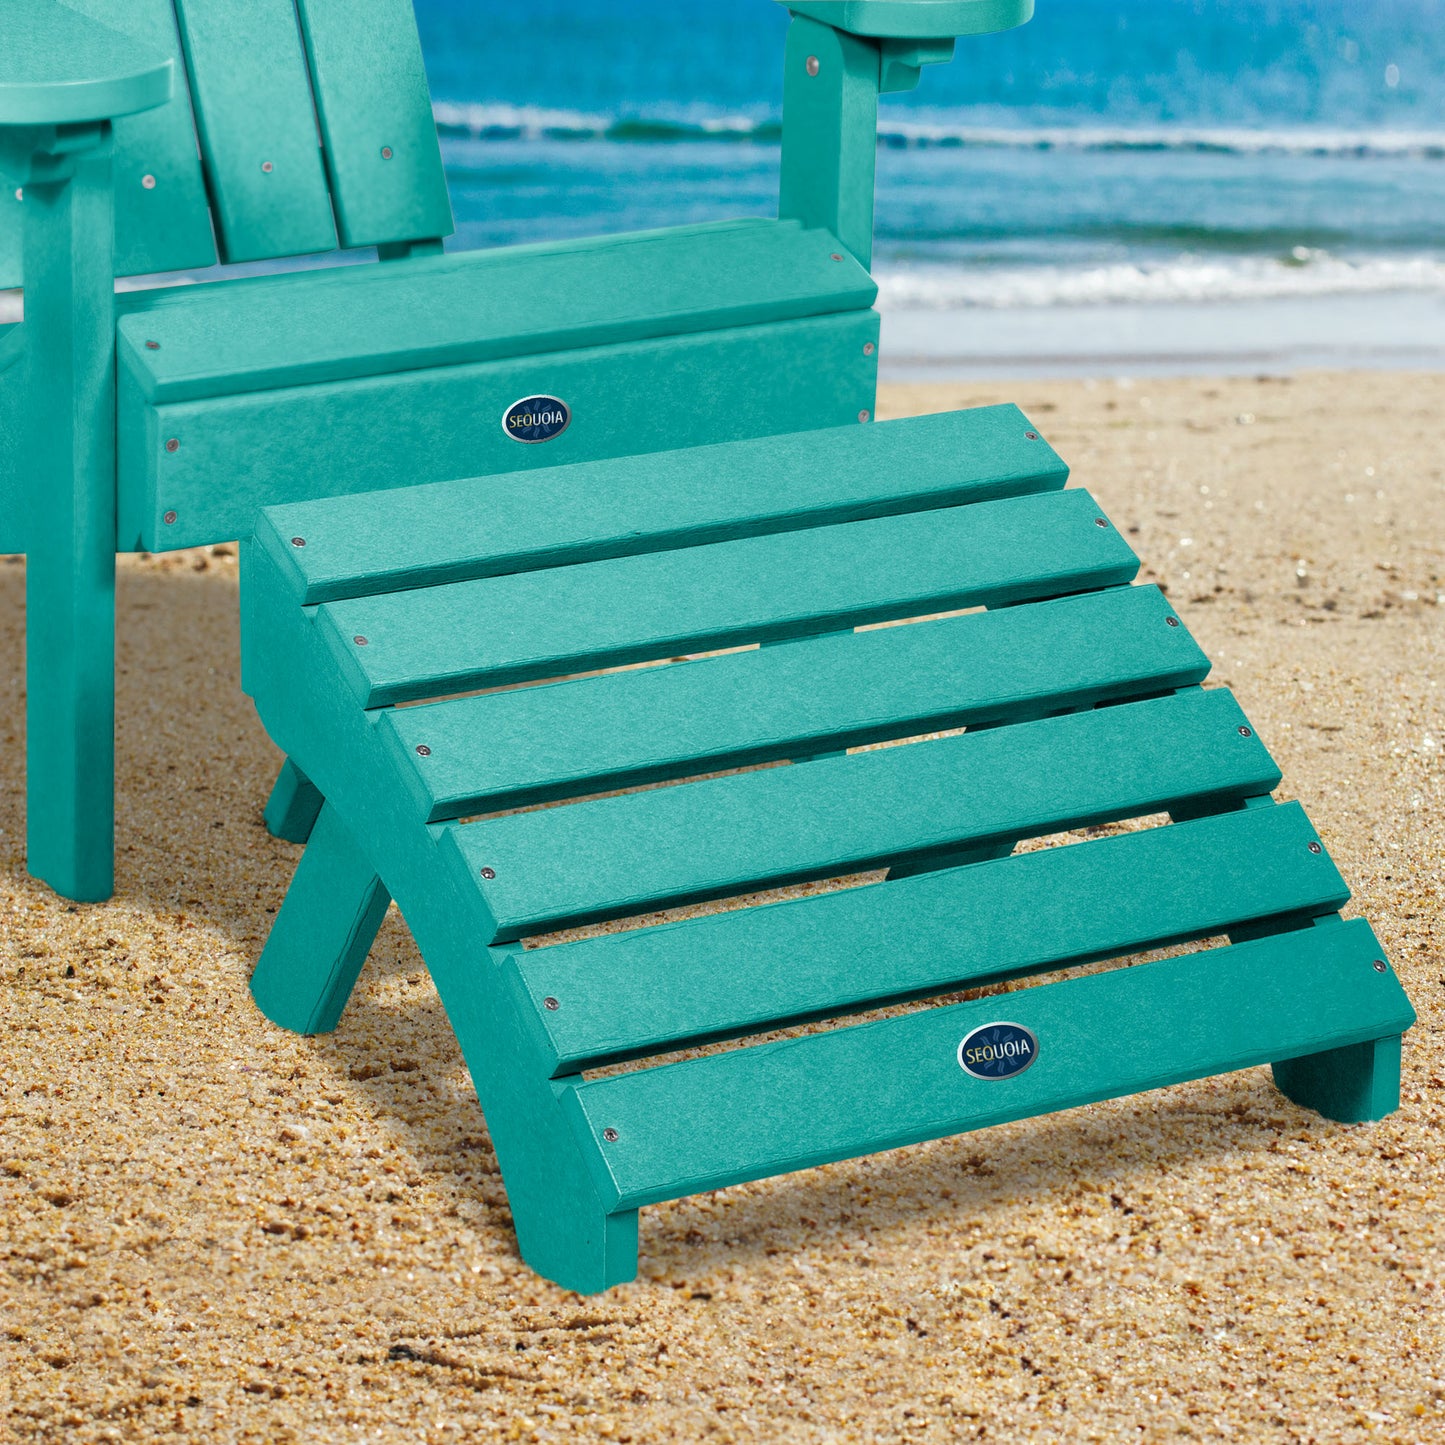 Blue Sunrise Coast folding ottoman and Adirondack chair on beach